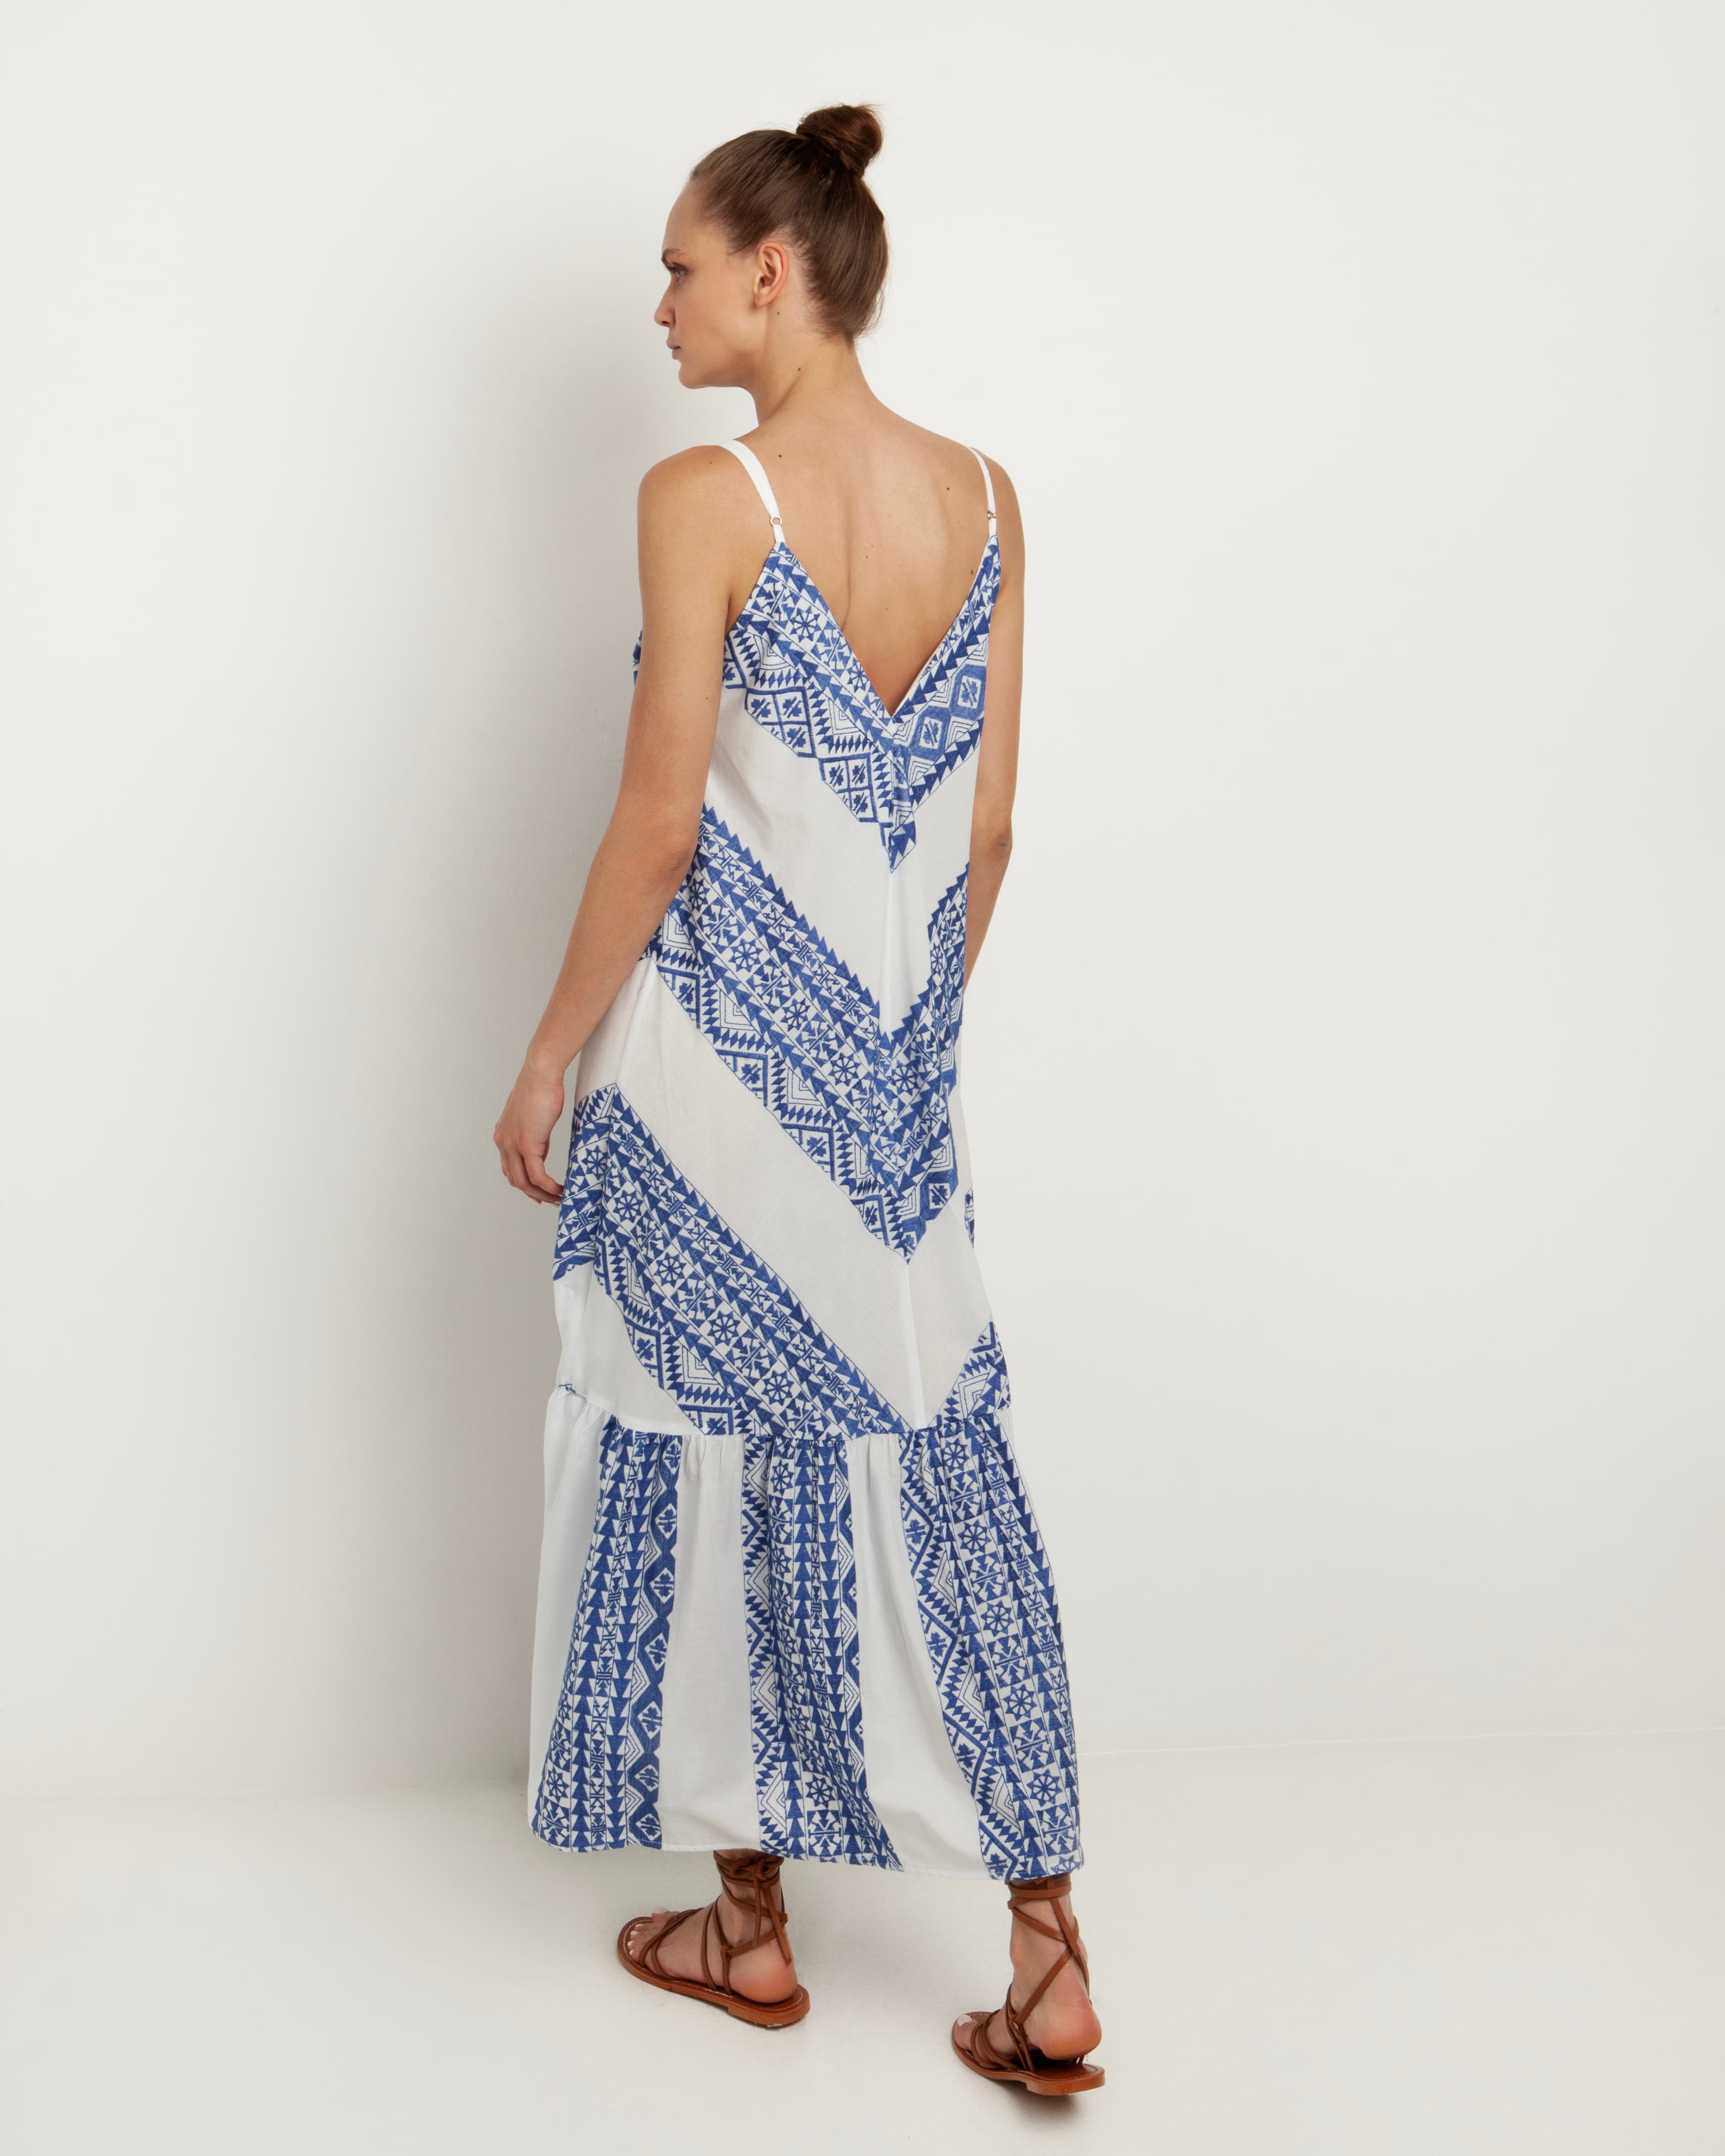 Greek Archaic Kori White and blue long dress